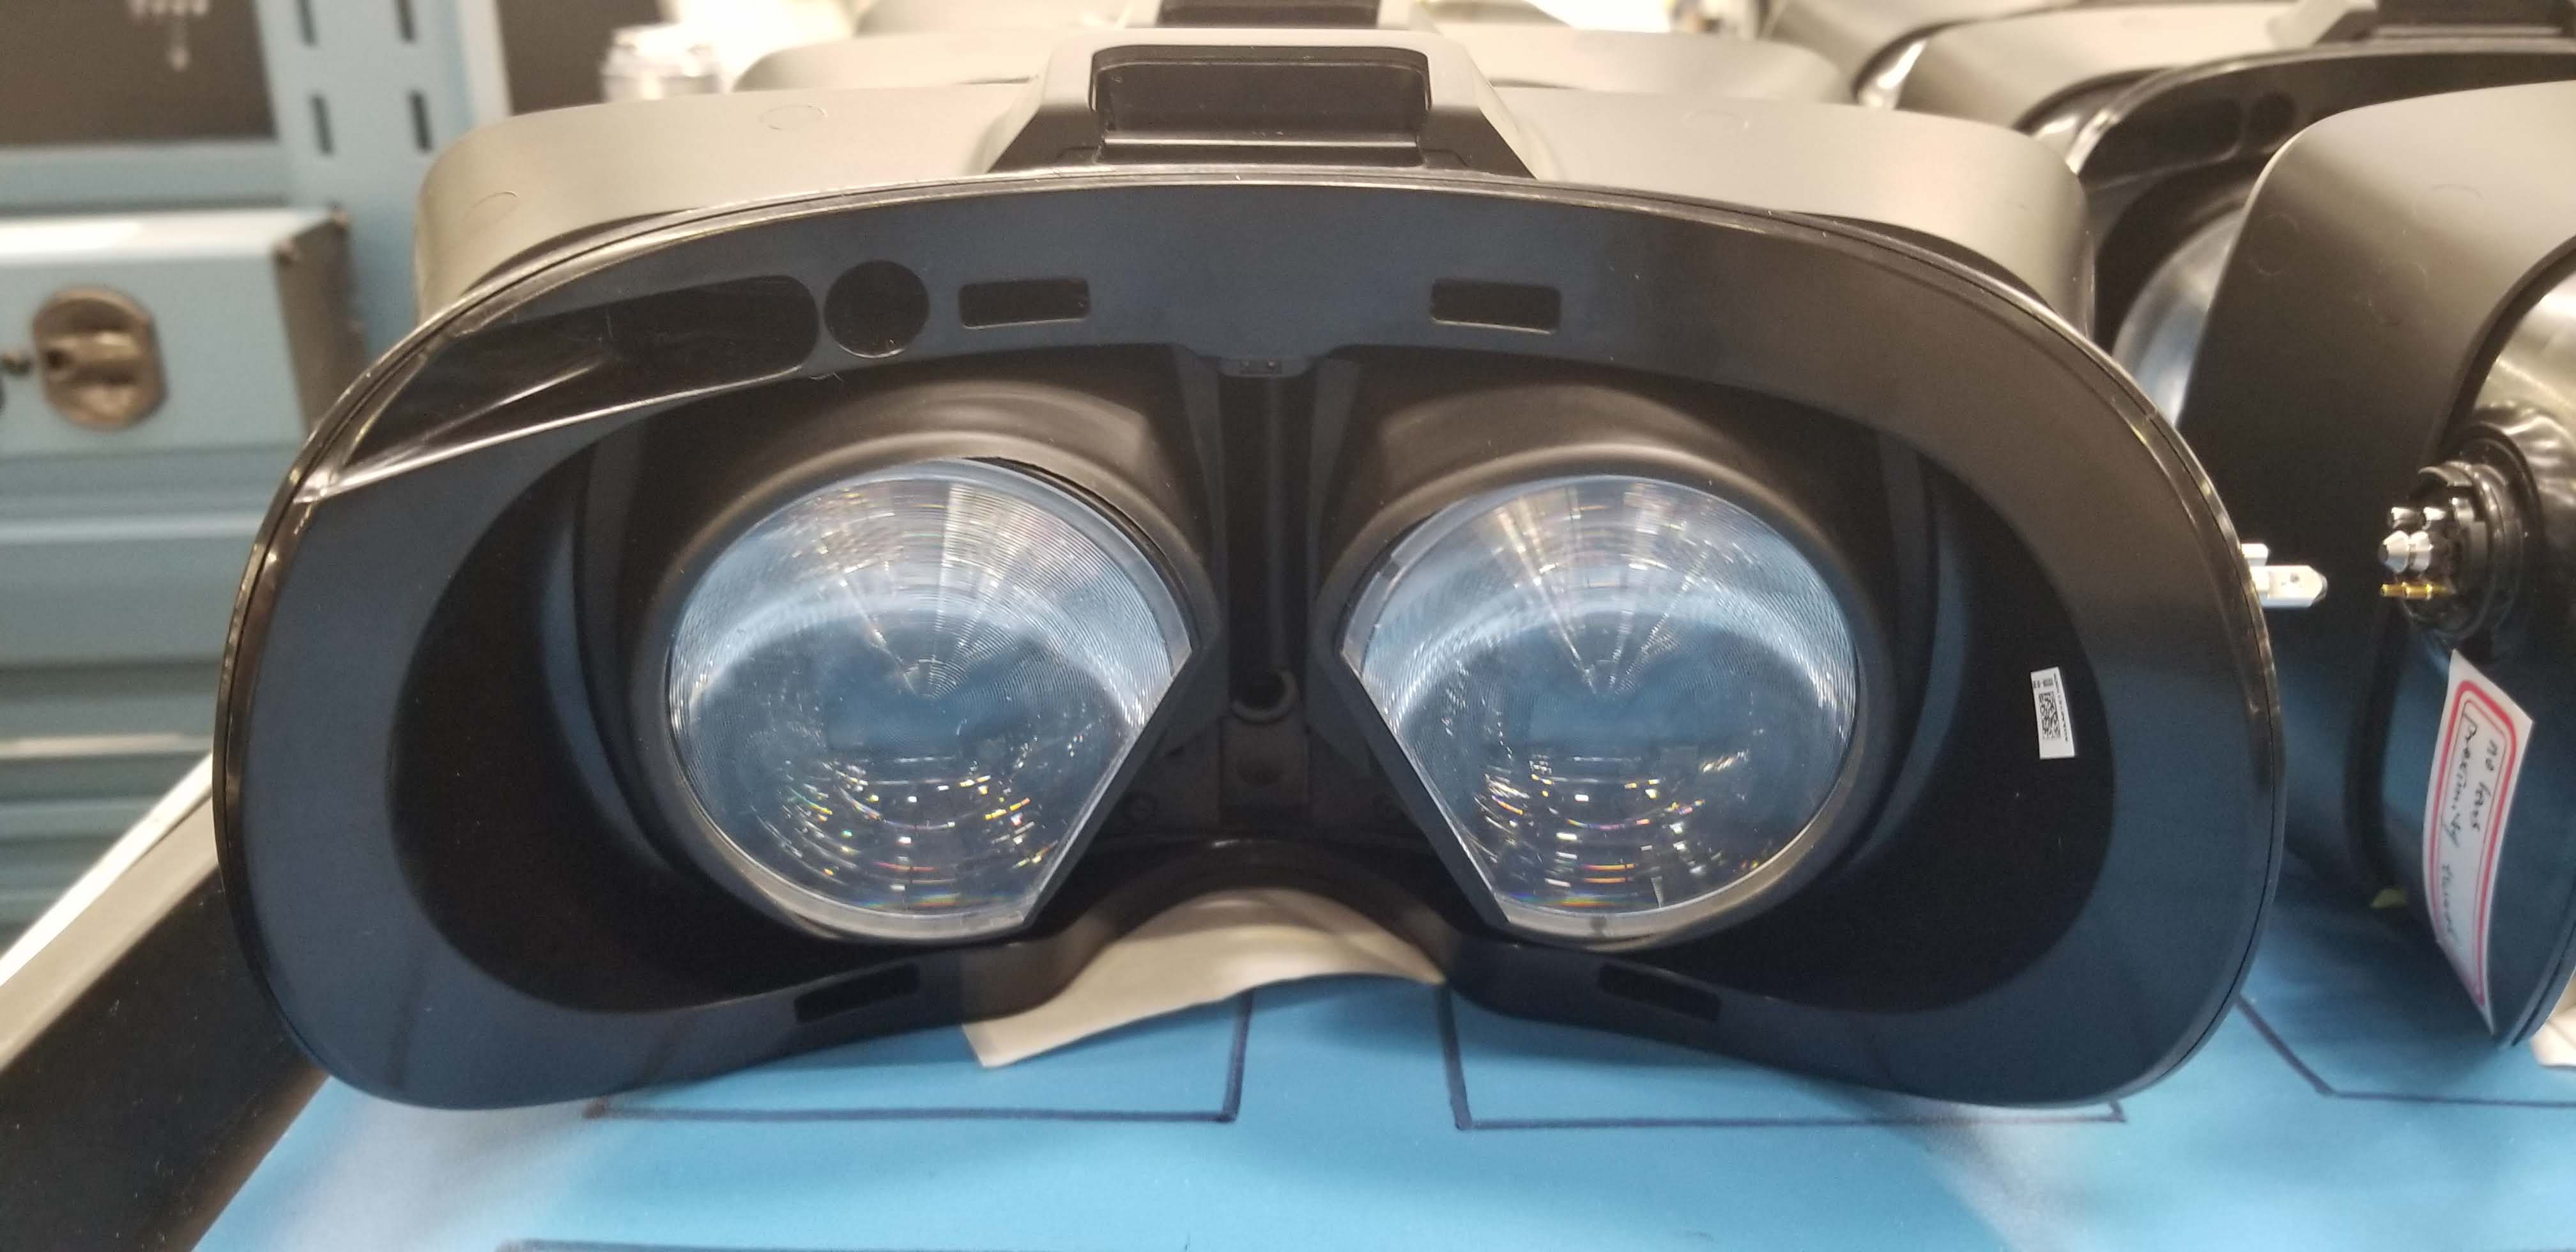 Valve-Prototyp-VR-Hardware